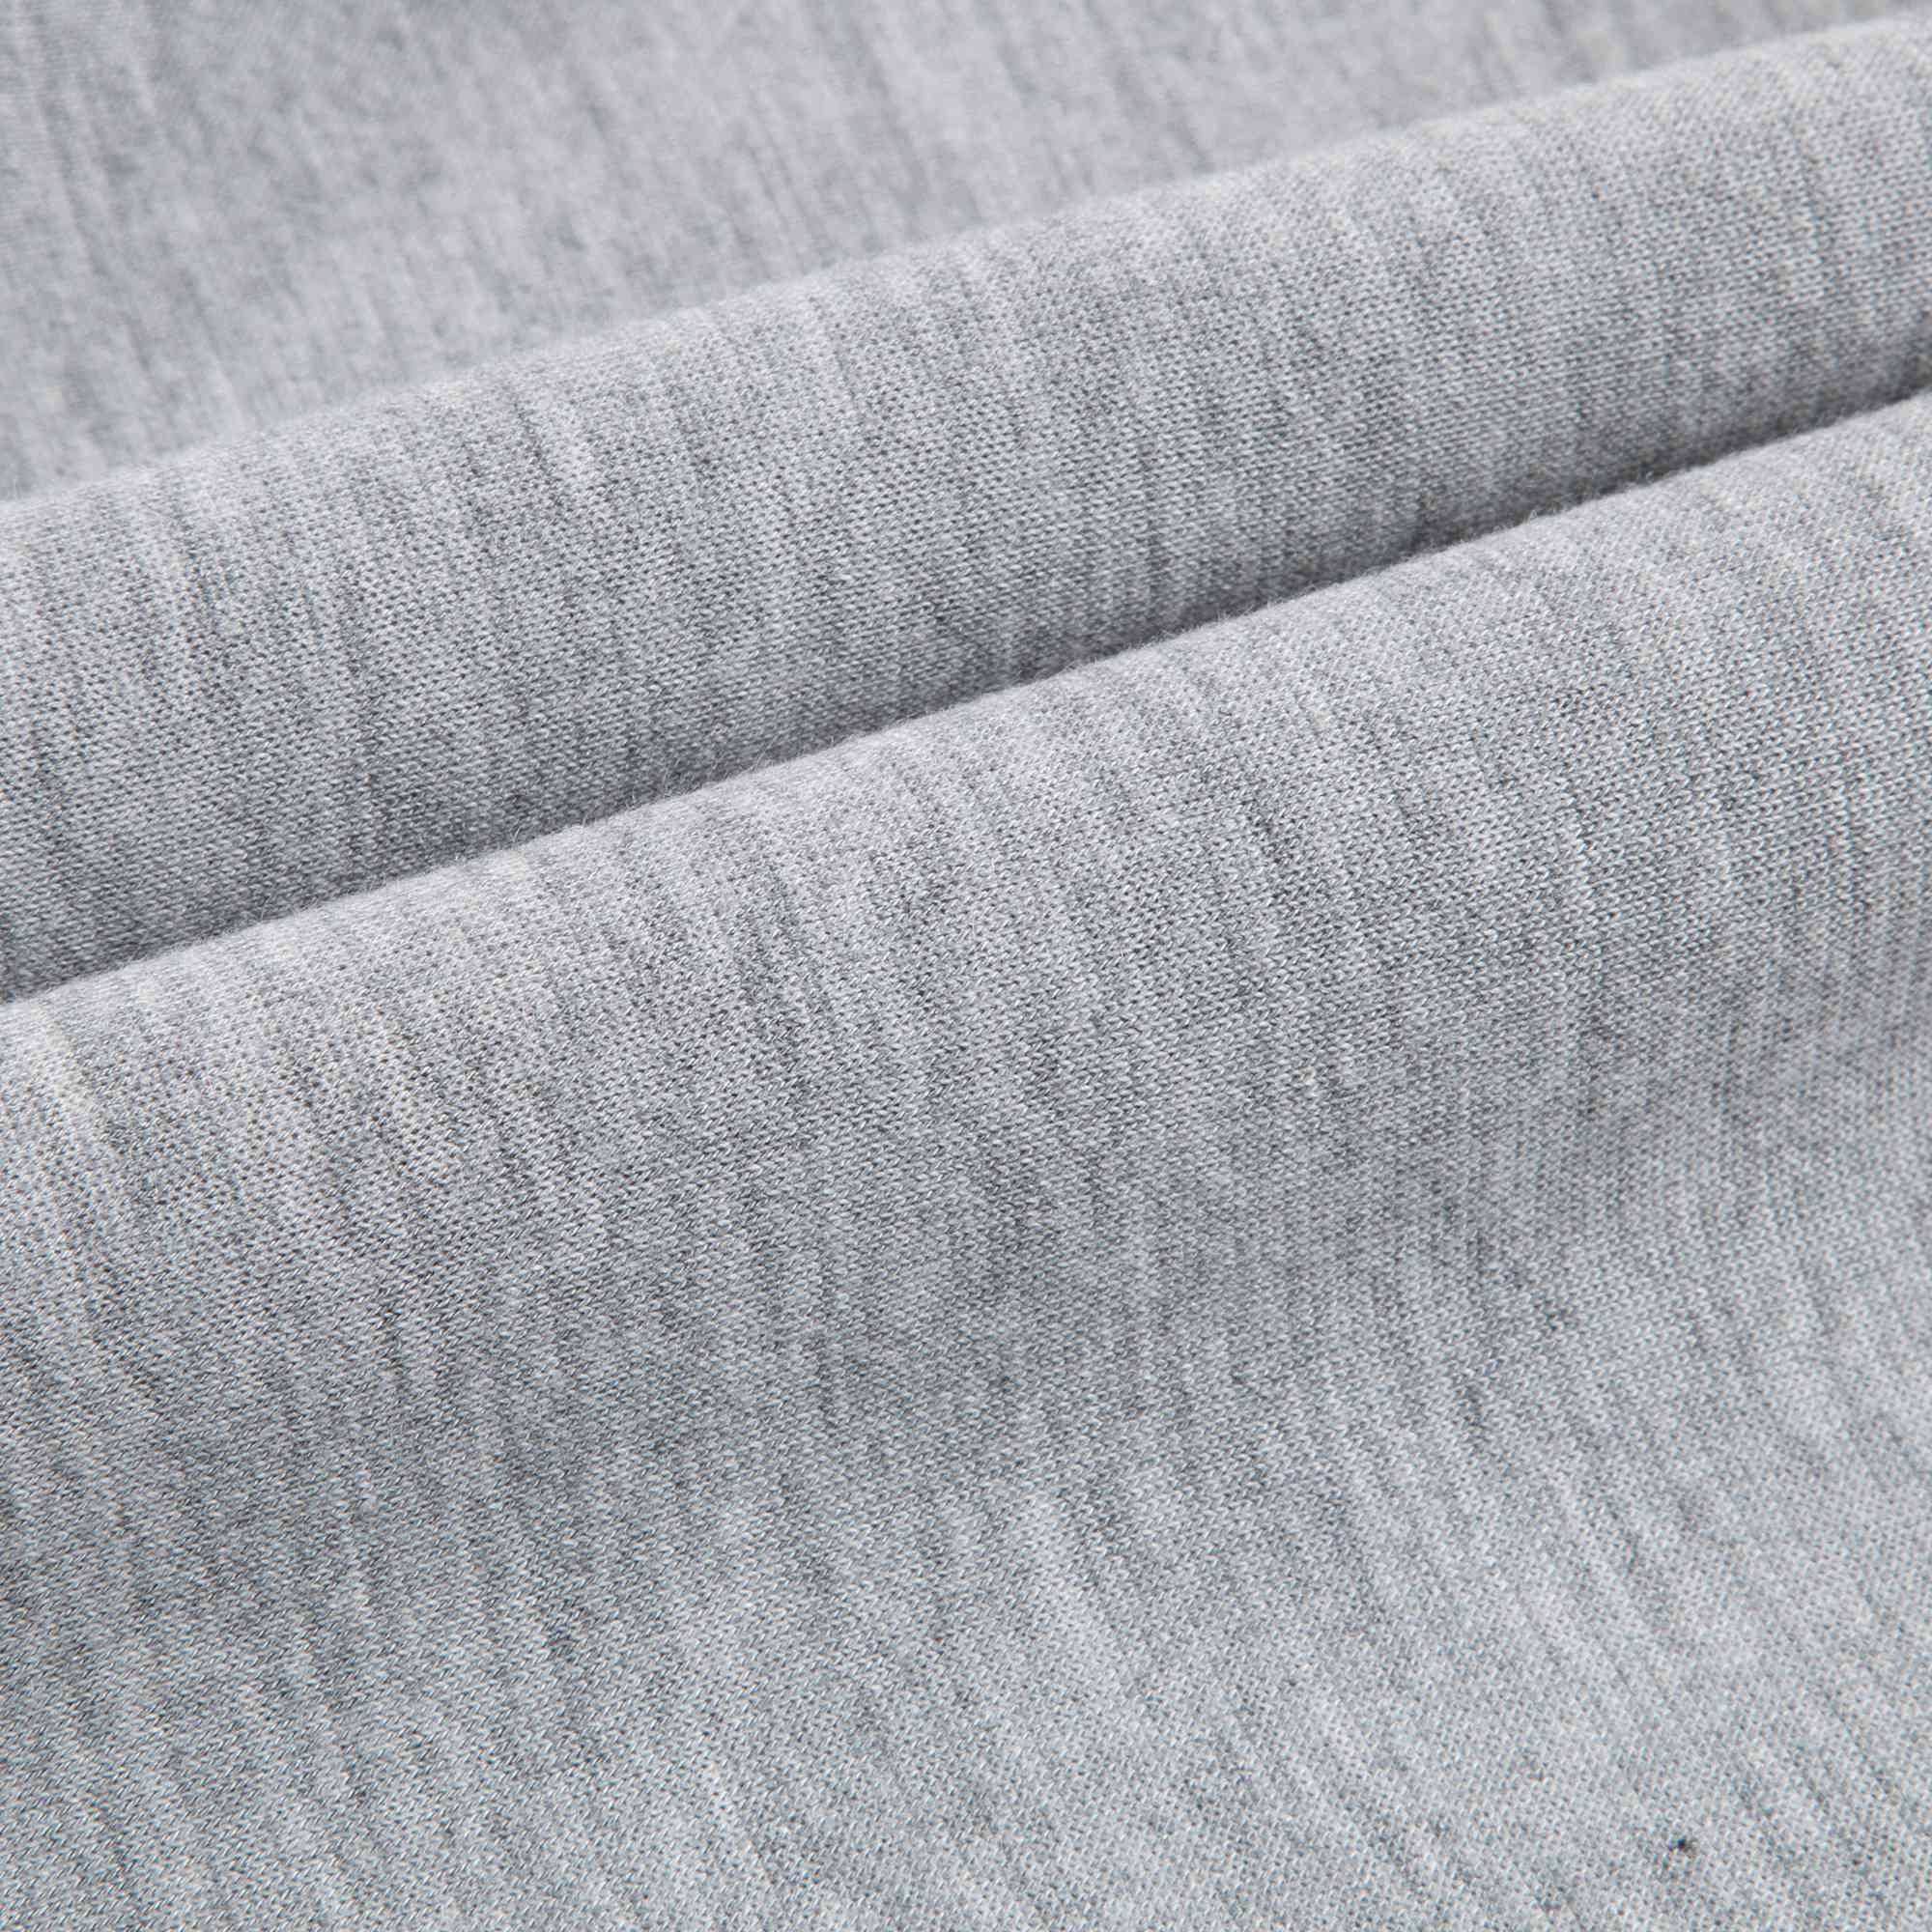 Boys Grey Printed Cotton Sweatshirt